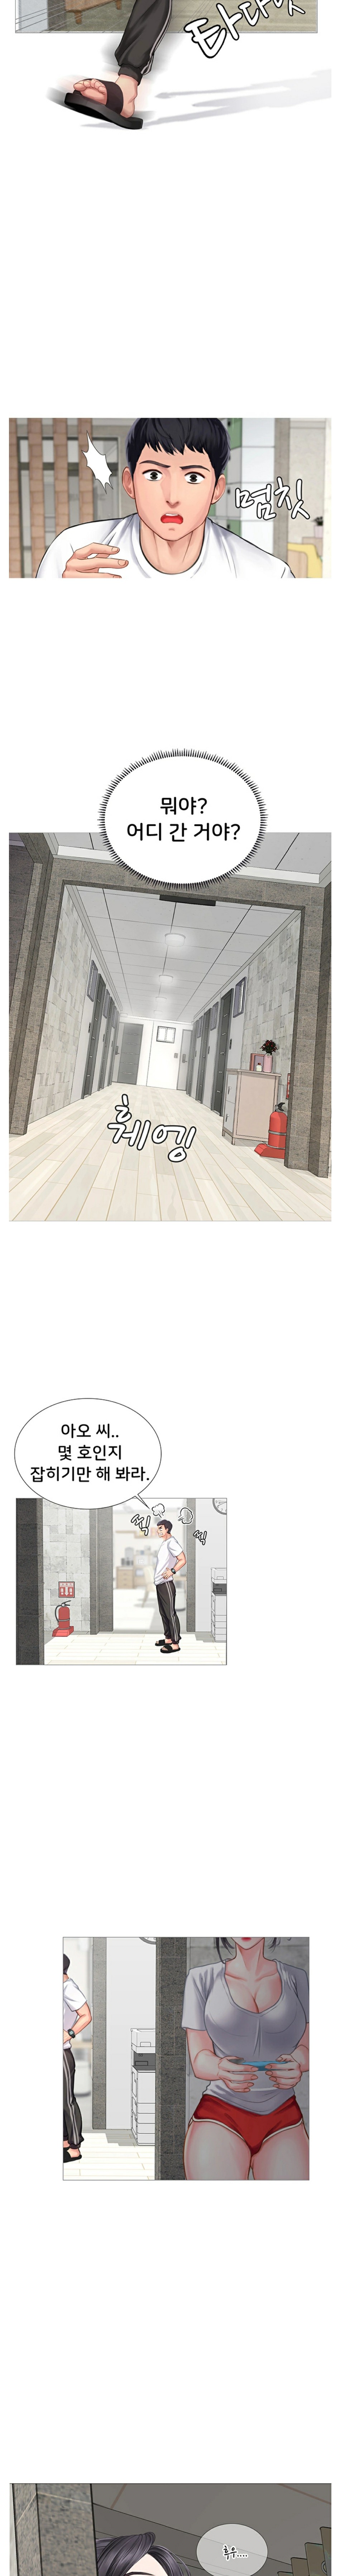 Should I Study at Noryangjin? Raw - Chapter 1 Page 20